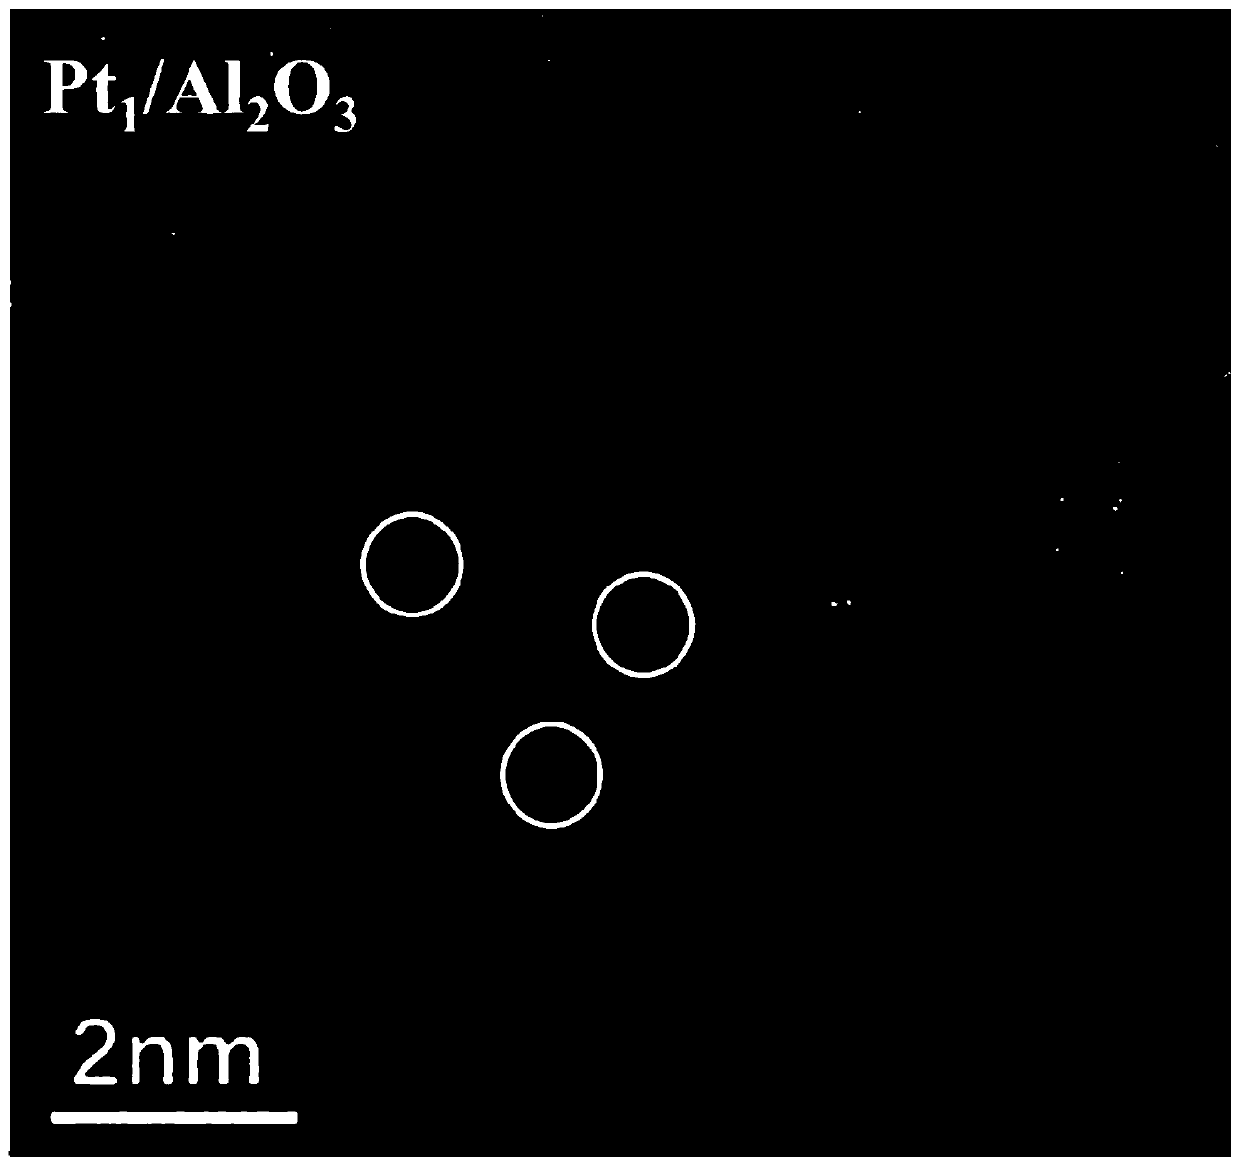 Method for preparing monatomic catalyst by atomizing precursor